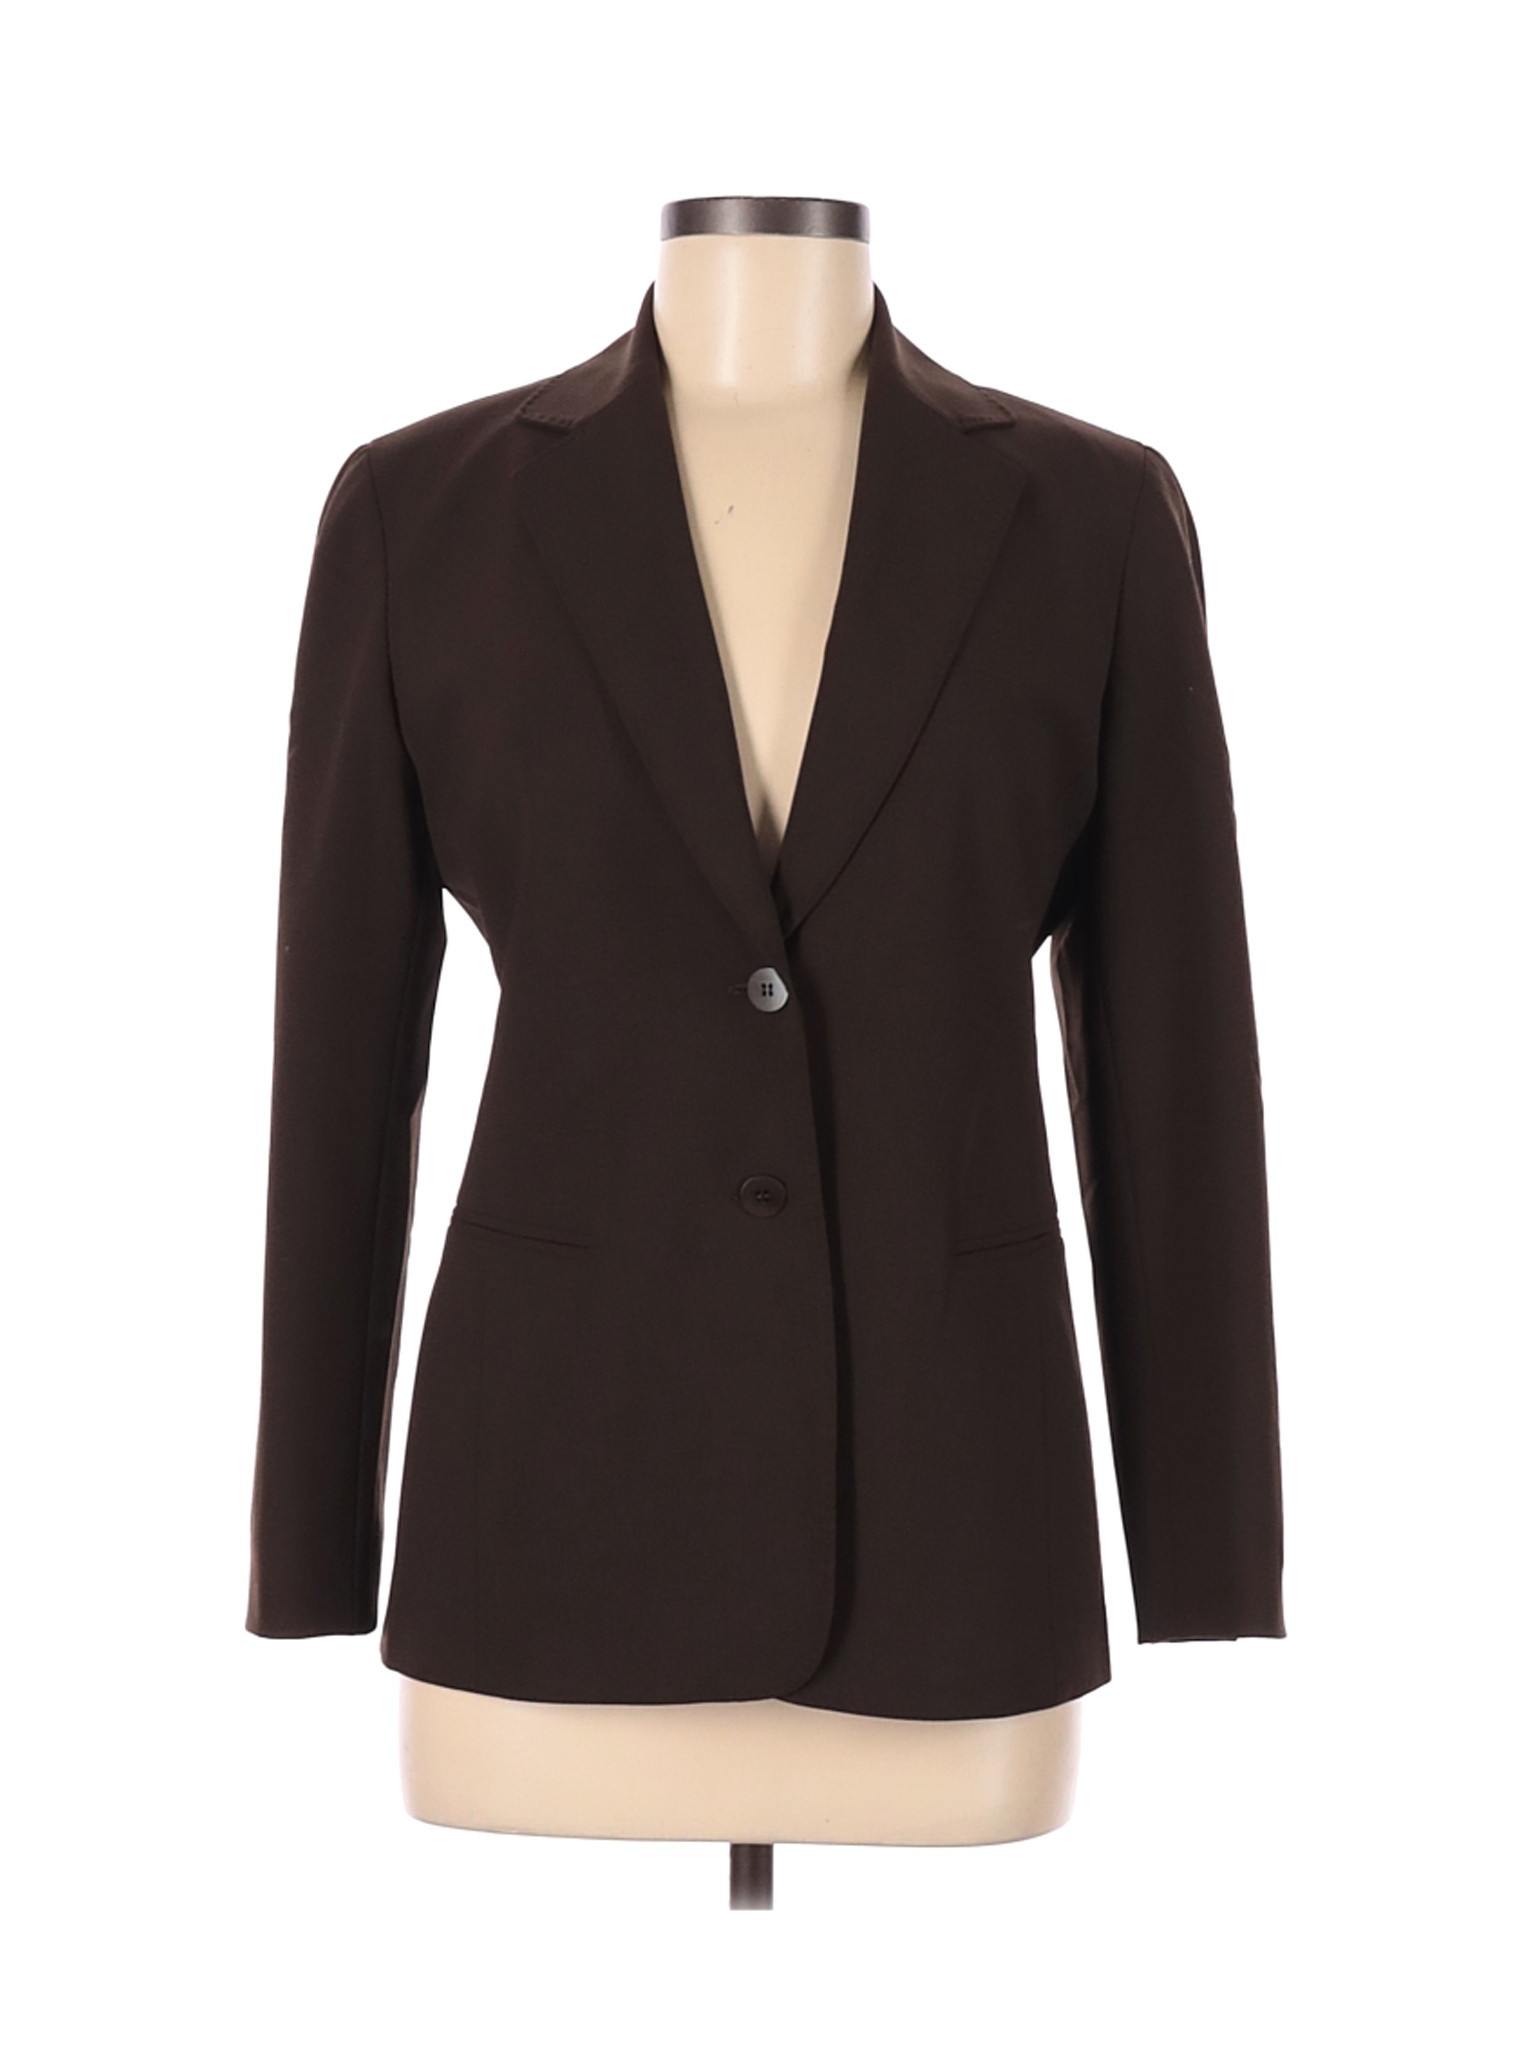 Lafayette 148 New York Women Brown Wool Blazer 2 | eBay